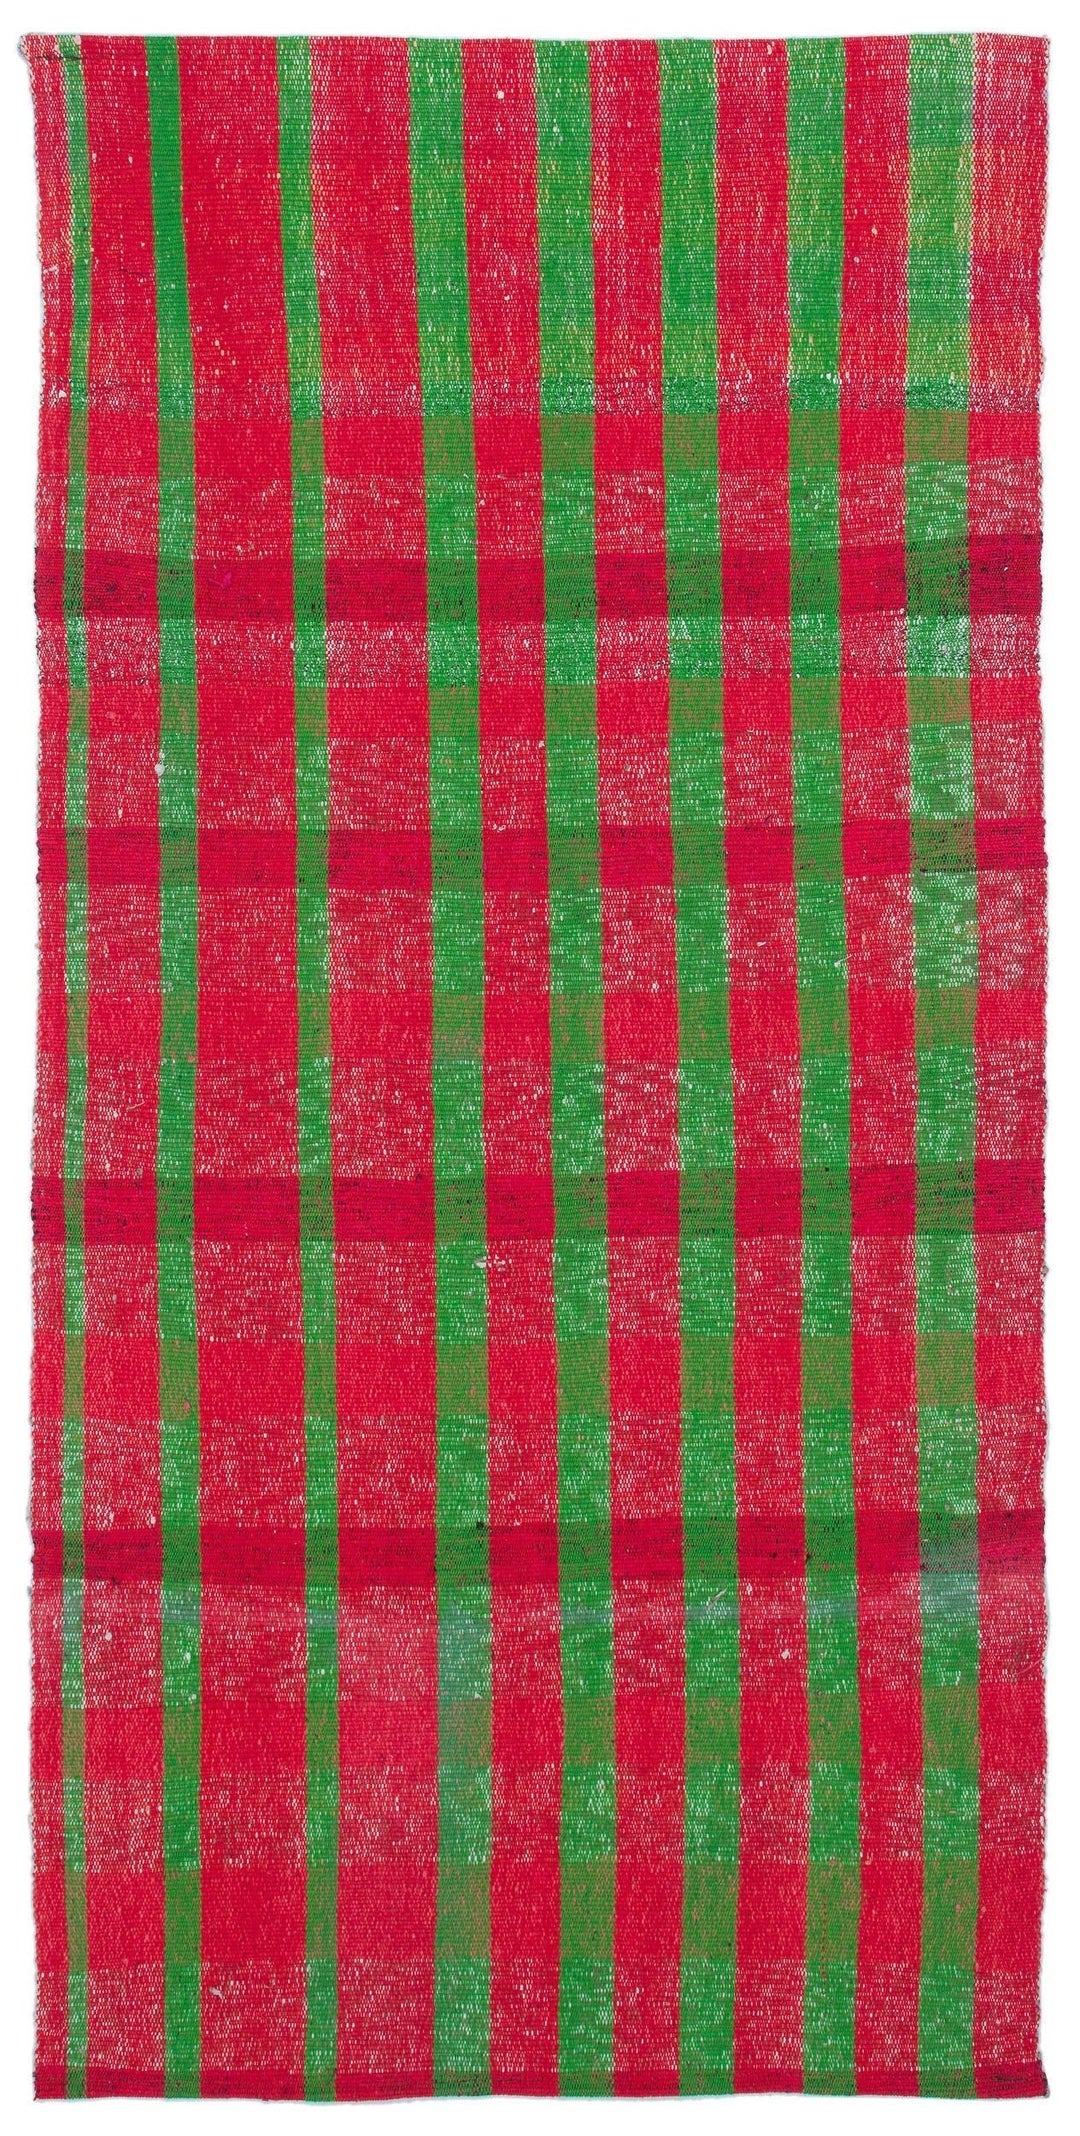 Cretan Red Striped Wool Hand-Woven Carpet 112 x 235